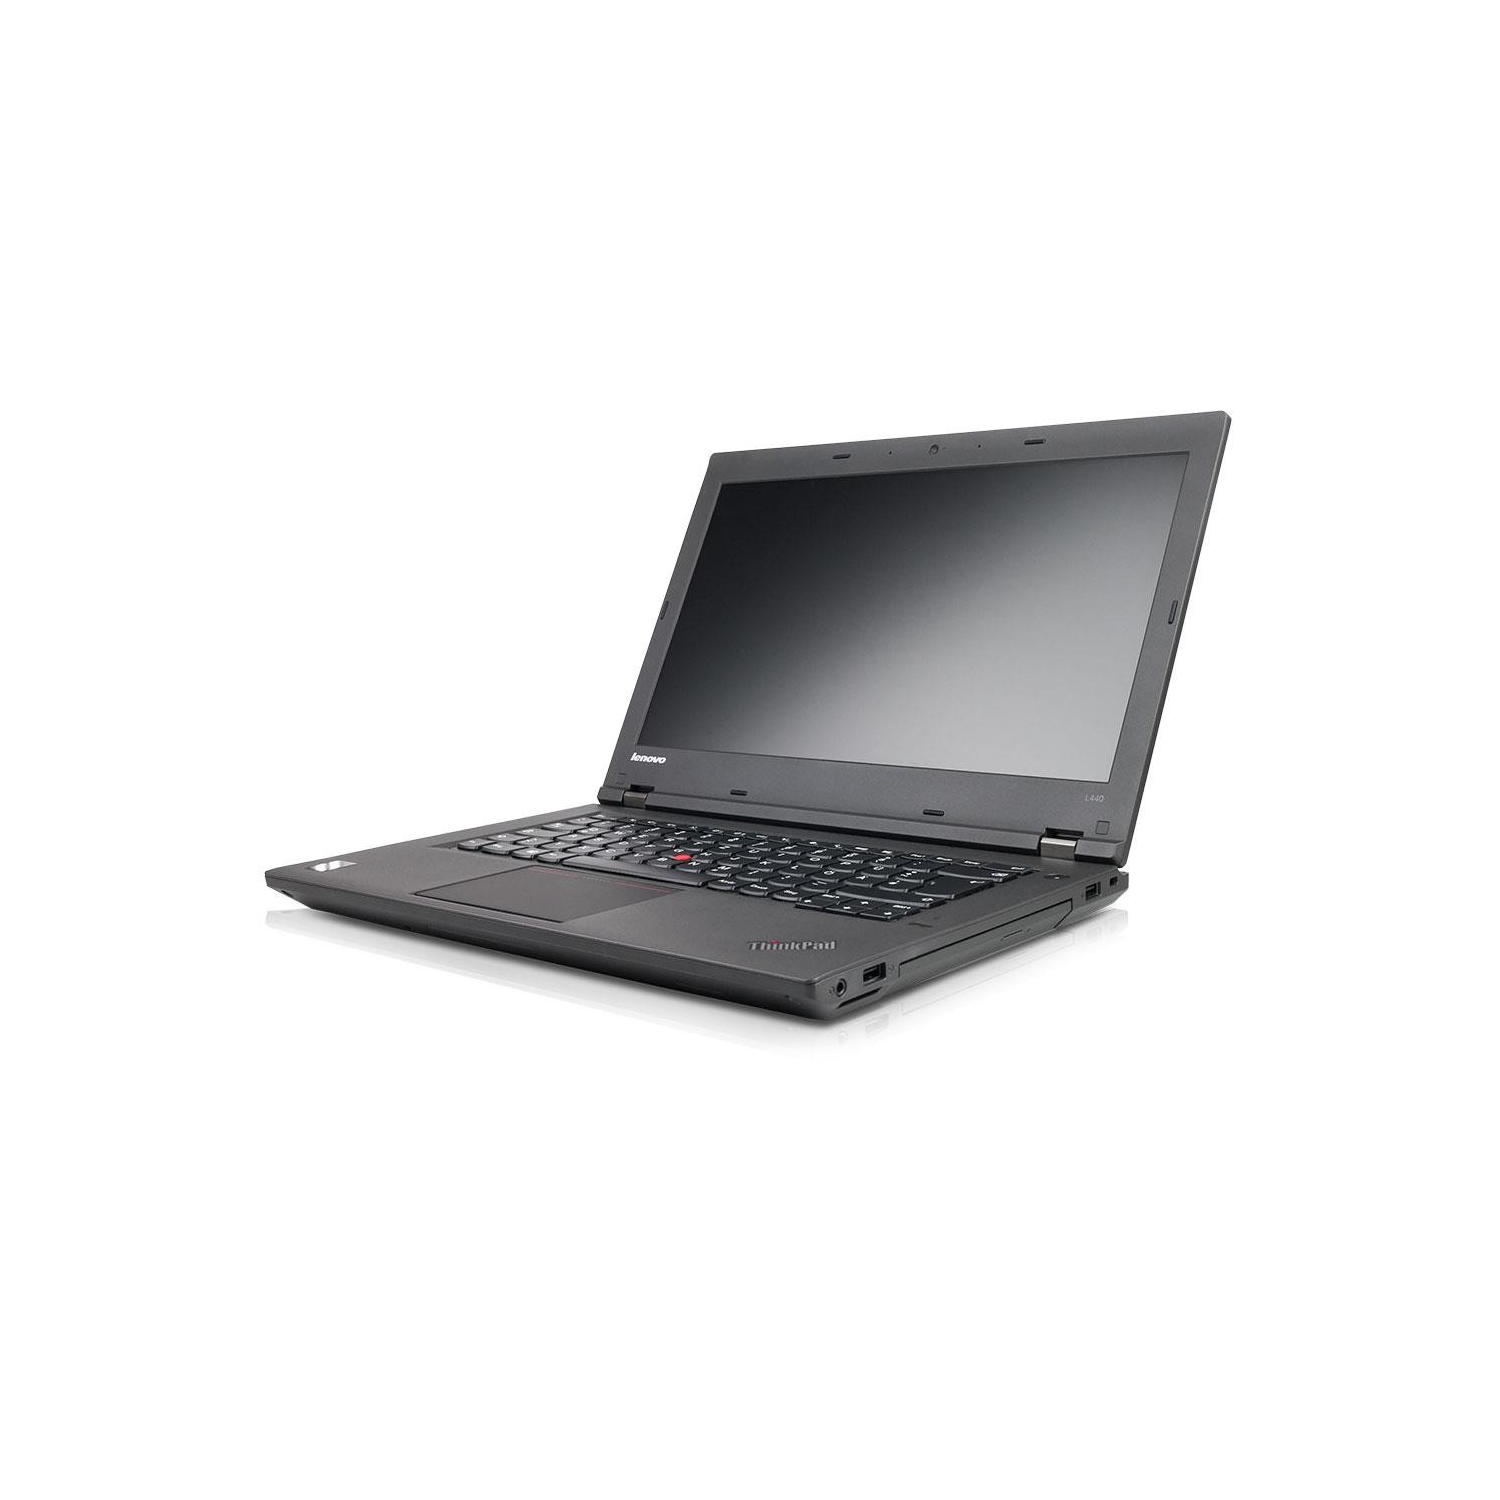 Refurbished (Good) - Lenovo ThinkPad L440 Core i5-4300M, 8GB RAM, 512GB SSD, 14.0"HD+ (1600x900), Intel HD Graphics, WEBCAM, Bluetooth